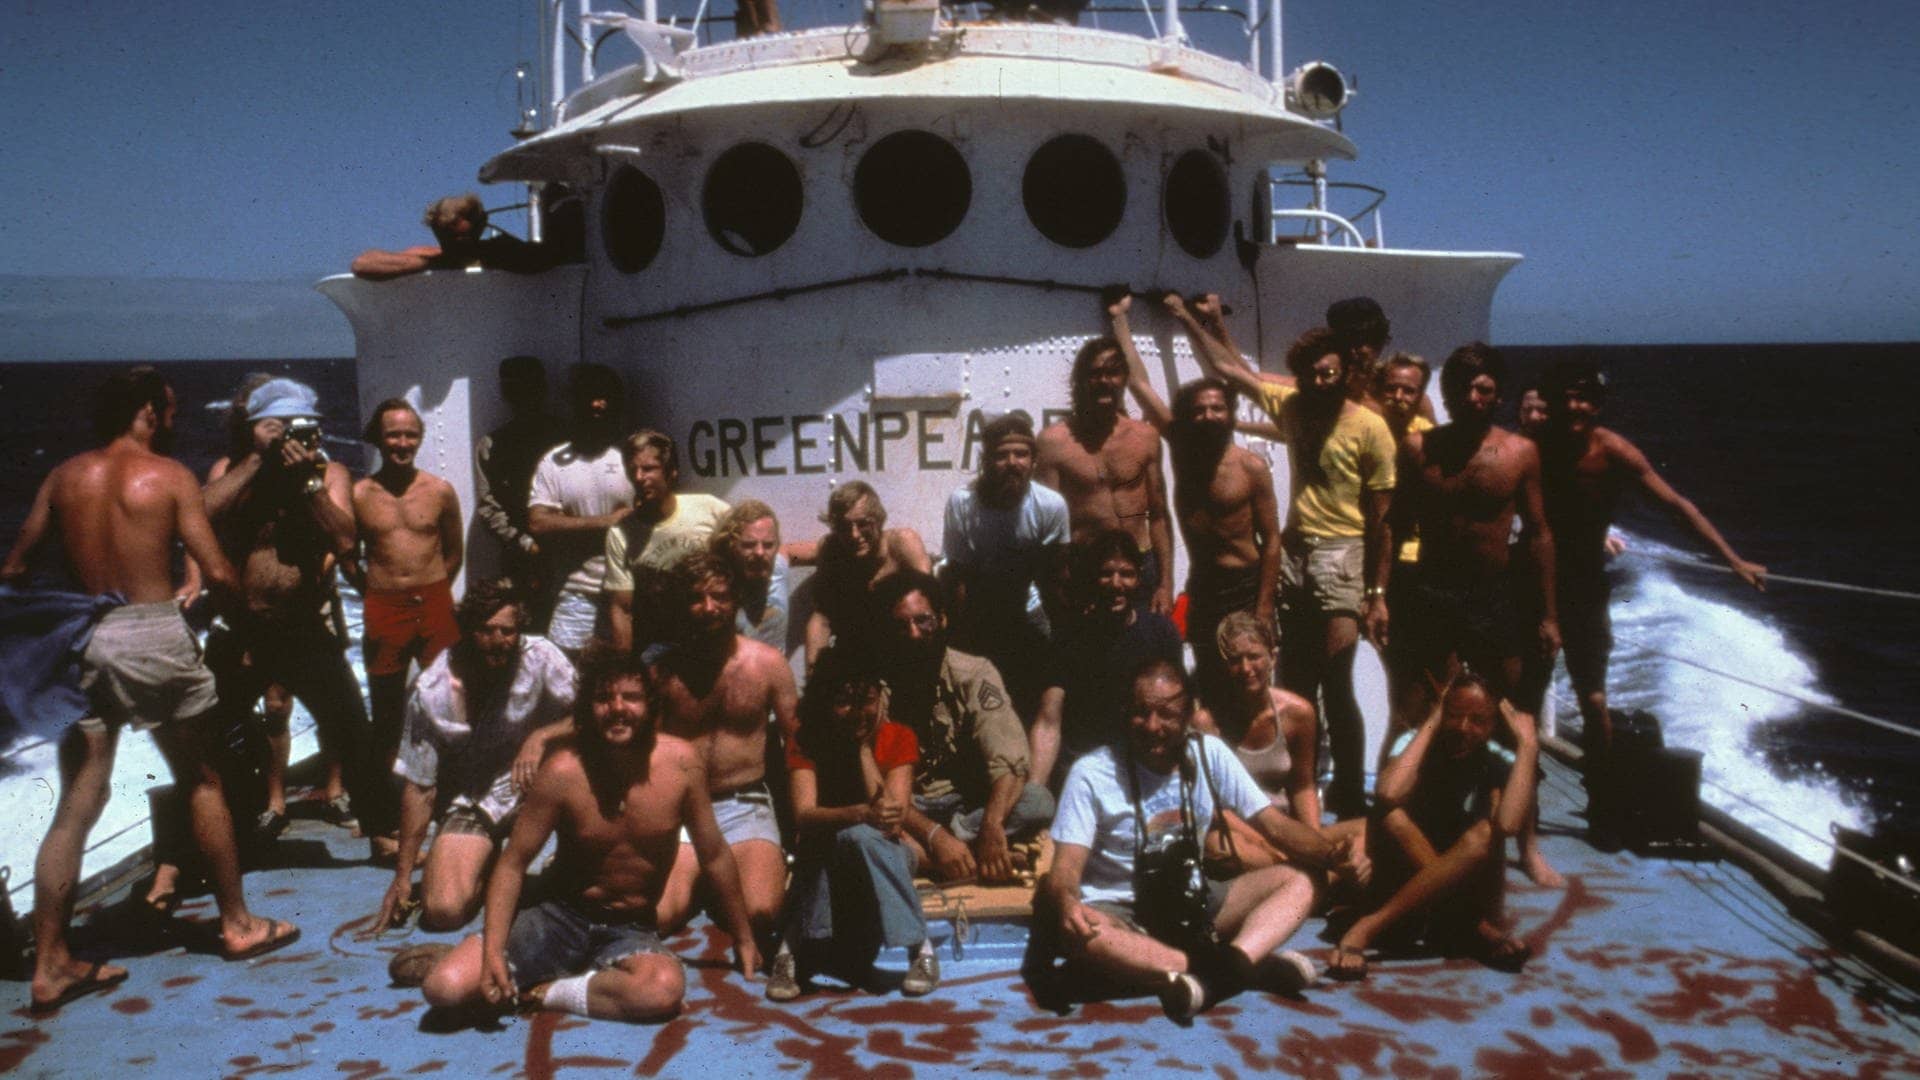 Die Greenpeace-Besatzung an Bord der SV Phyllis Cormack während der Amchitka-Kampagne im Jahr 1971.  (Foto: dpa Bildfunk, picture alliance/dpa/Greenpeace International | Robert Keziere)